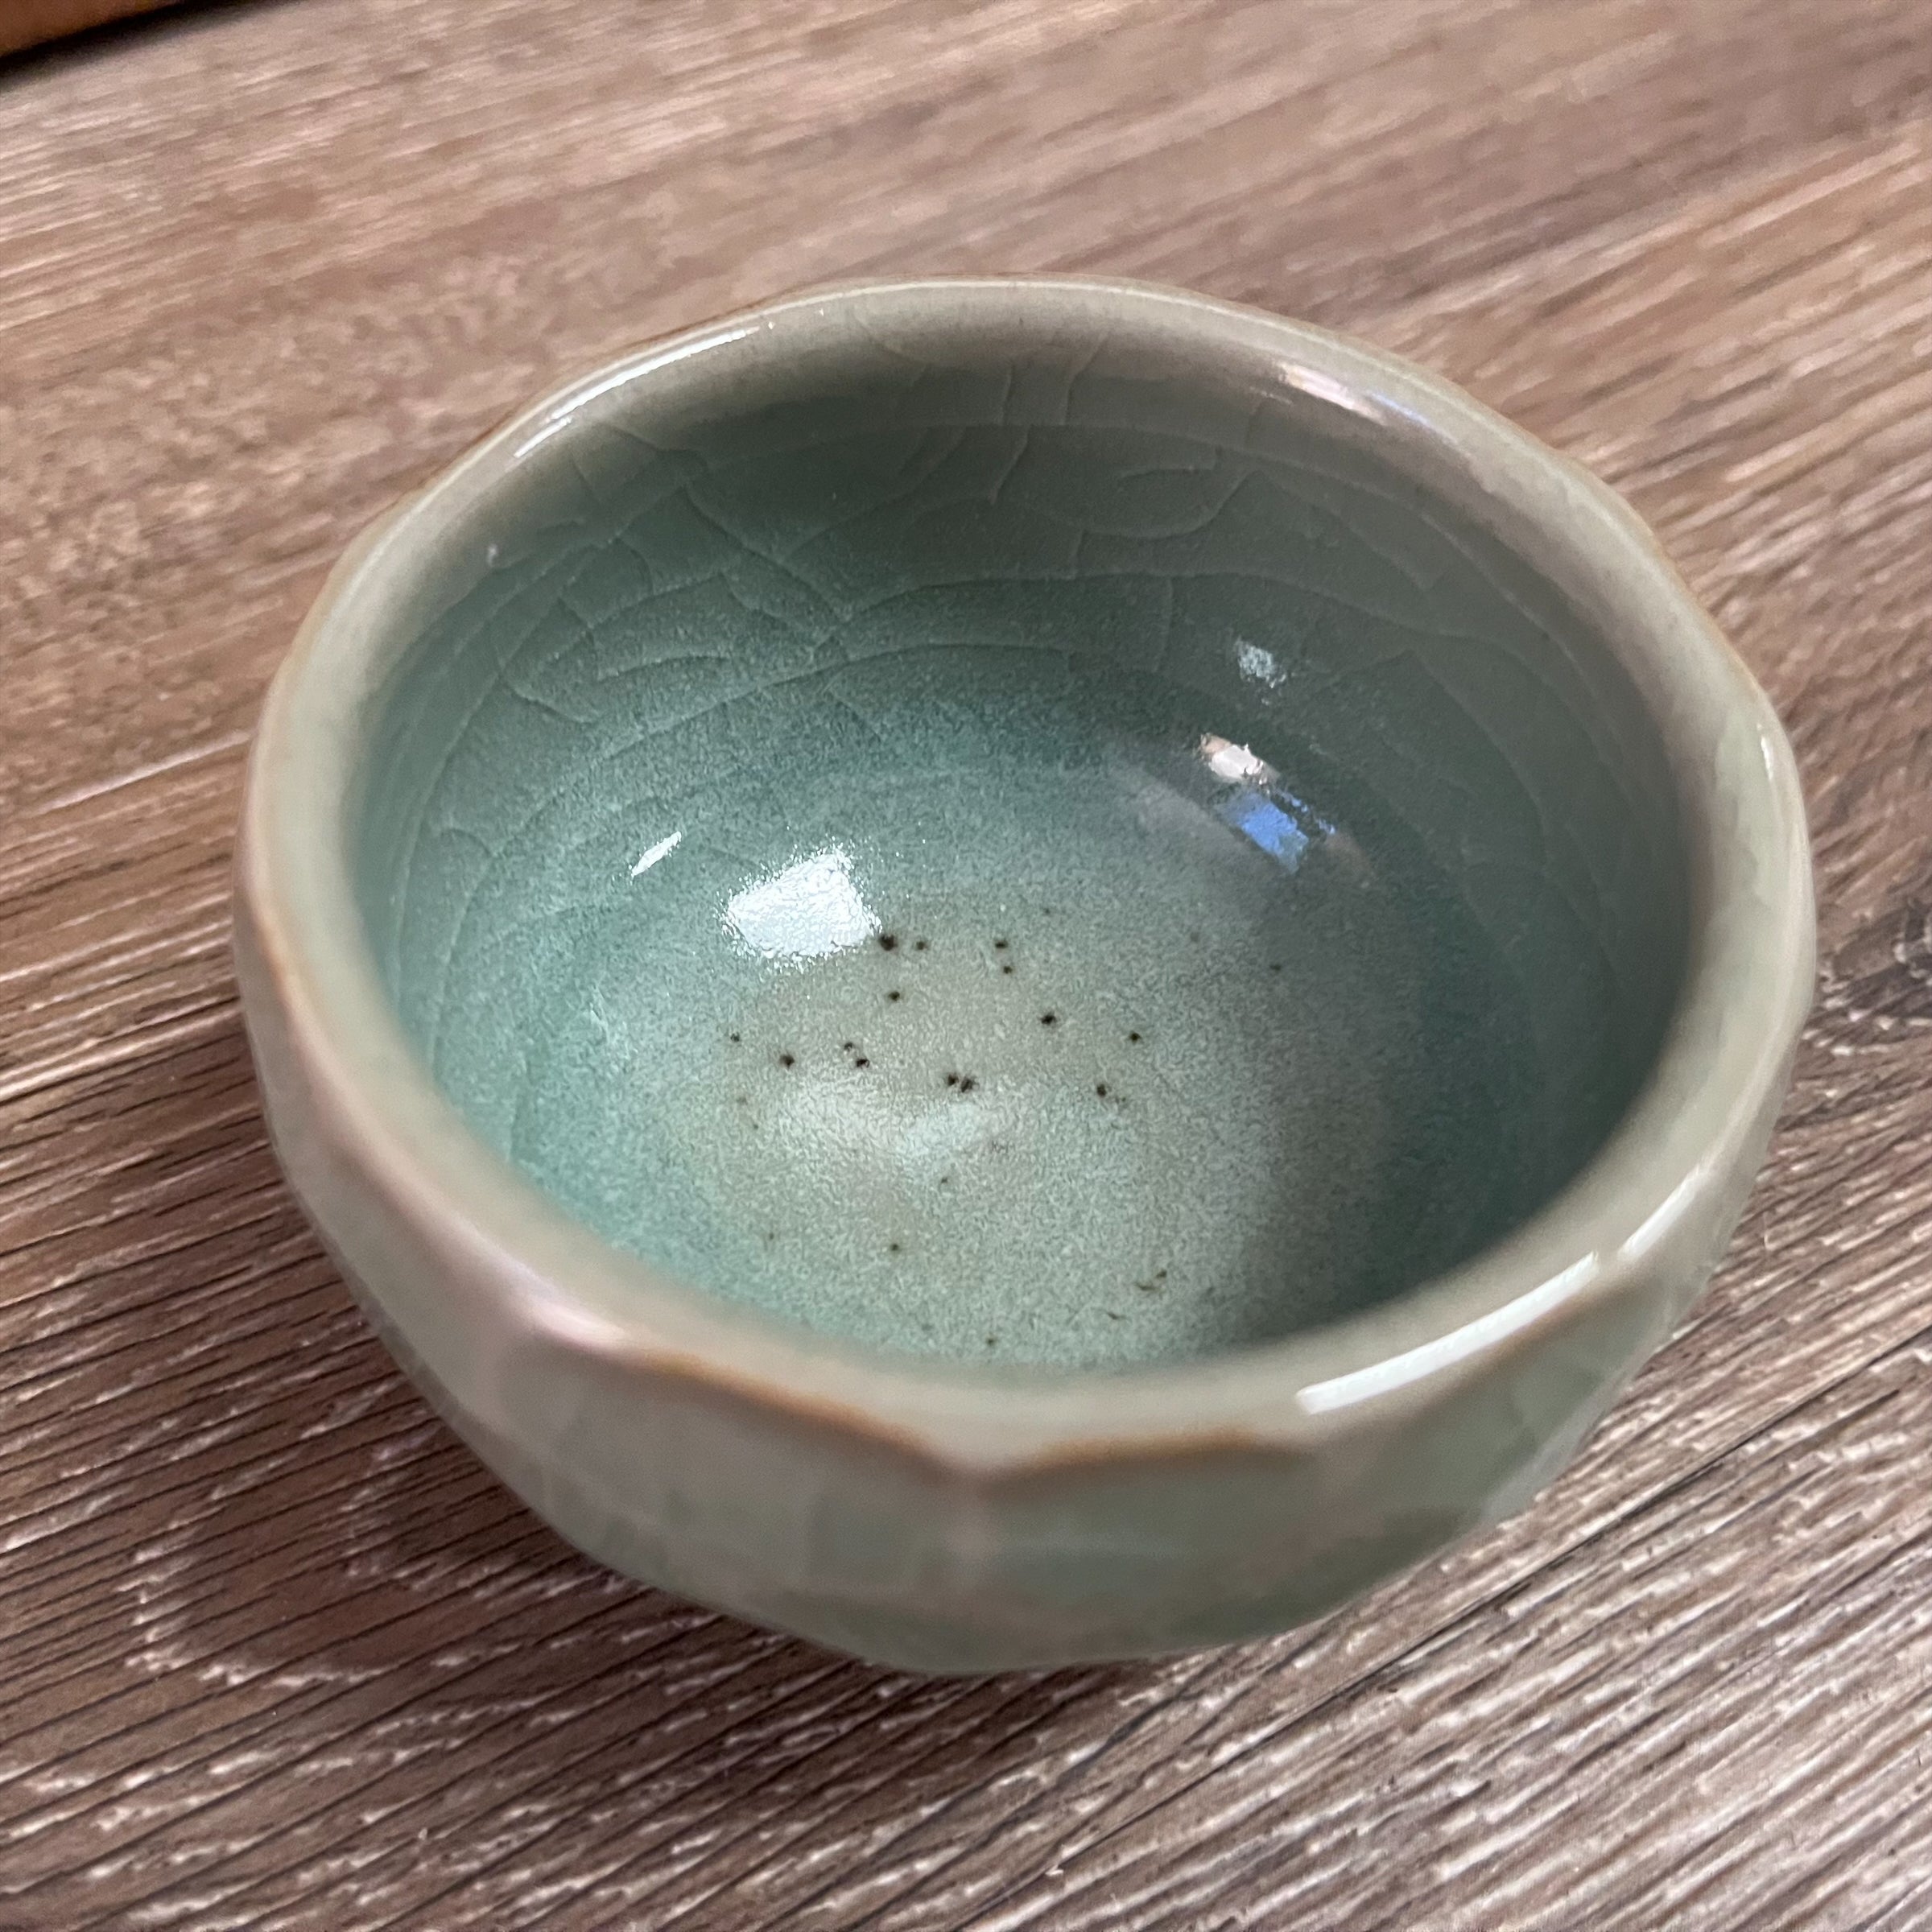 Taiwanese Handmade Wood-fired Ceramic Teacup - Ice Cracked Blue